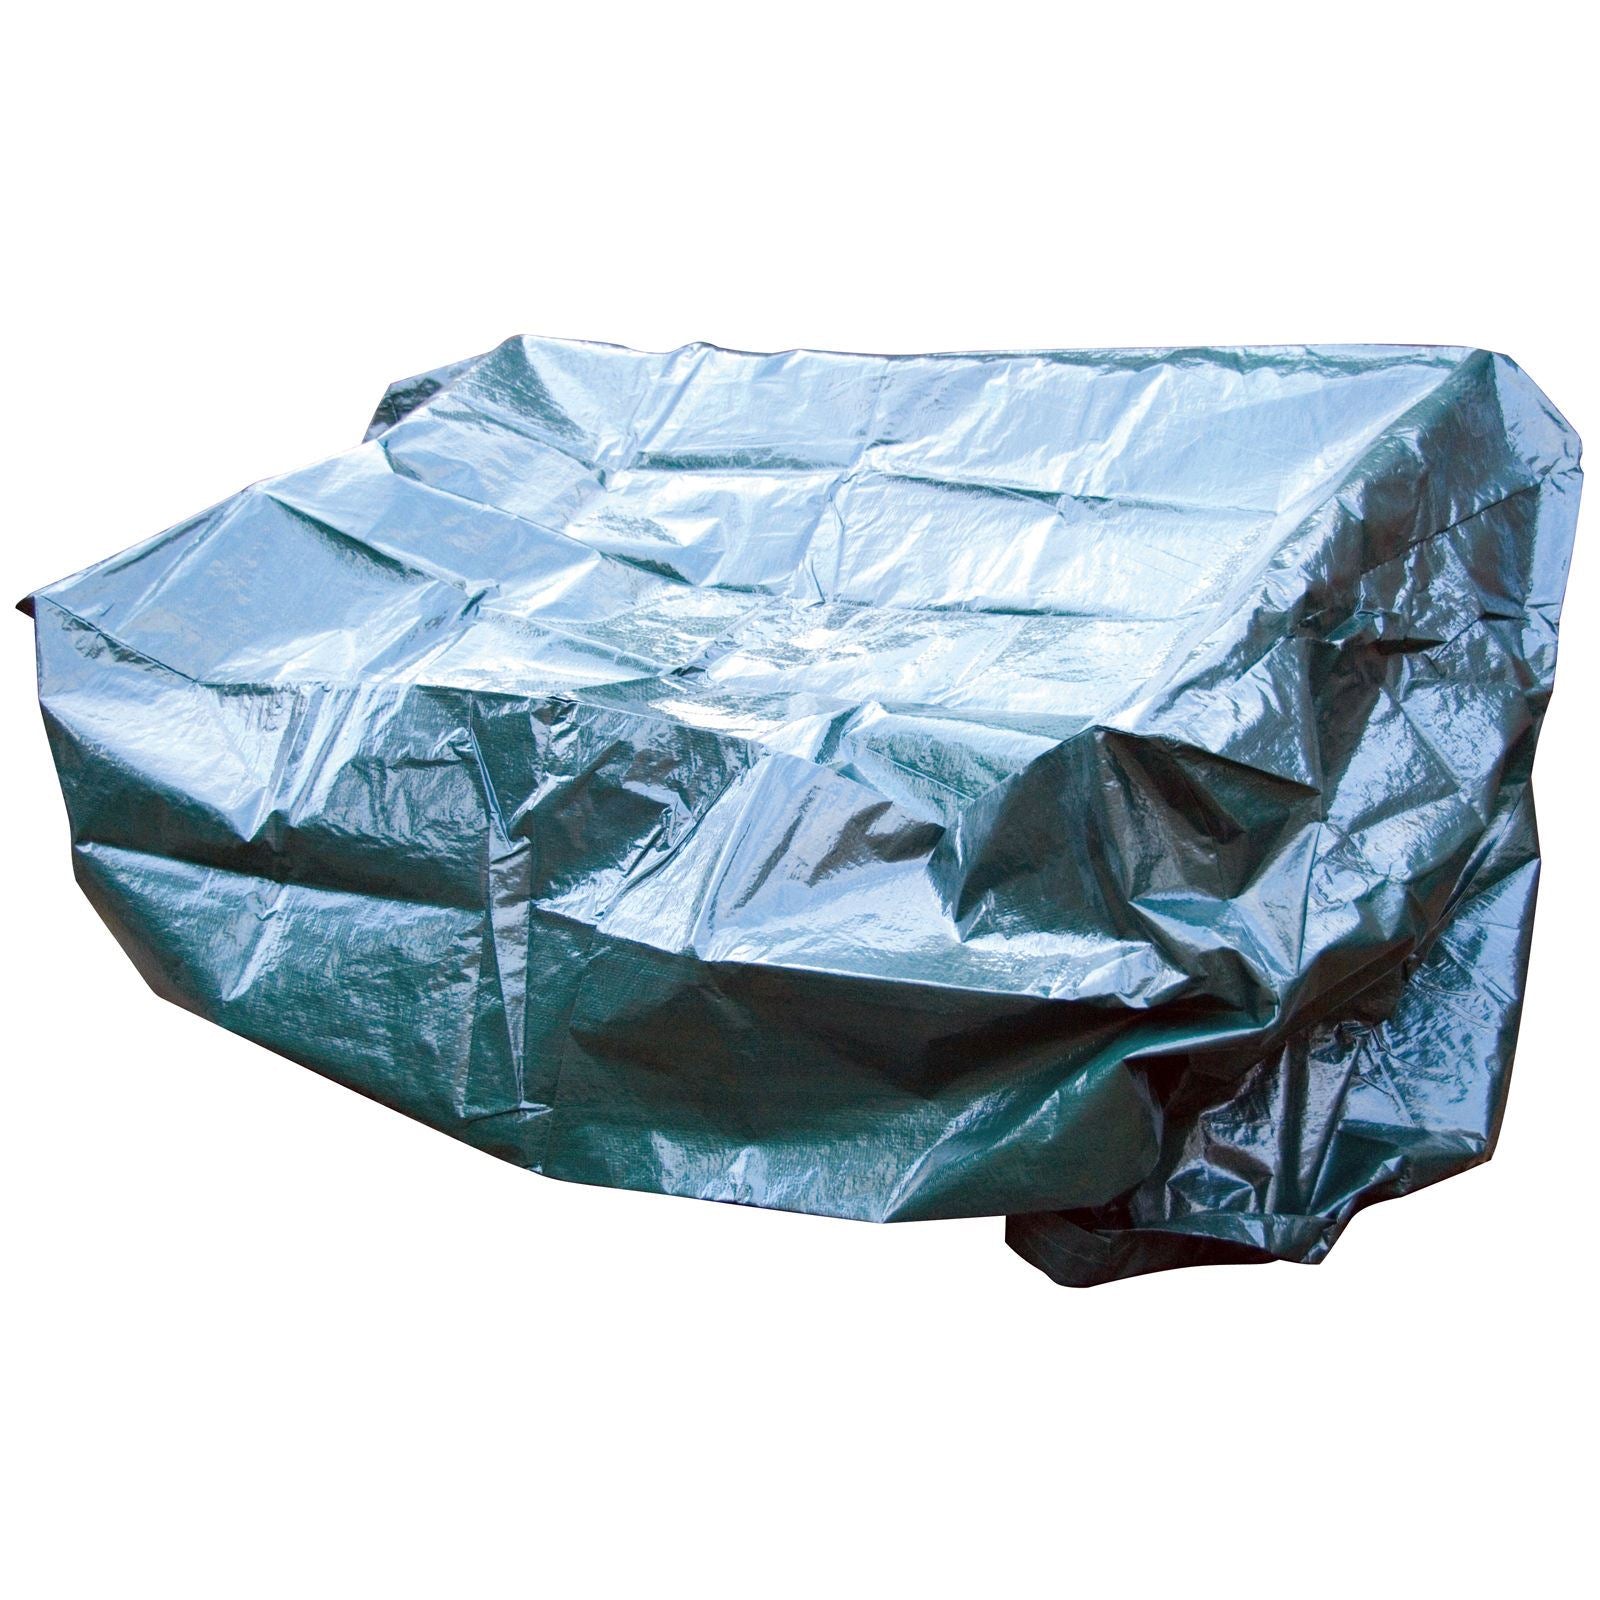 Silverline Bench Cover 1600 x 750 x 780mm Waterproof Garden Rain Protector Seat